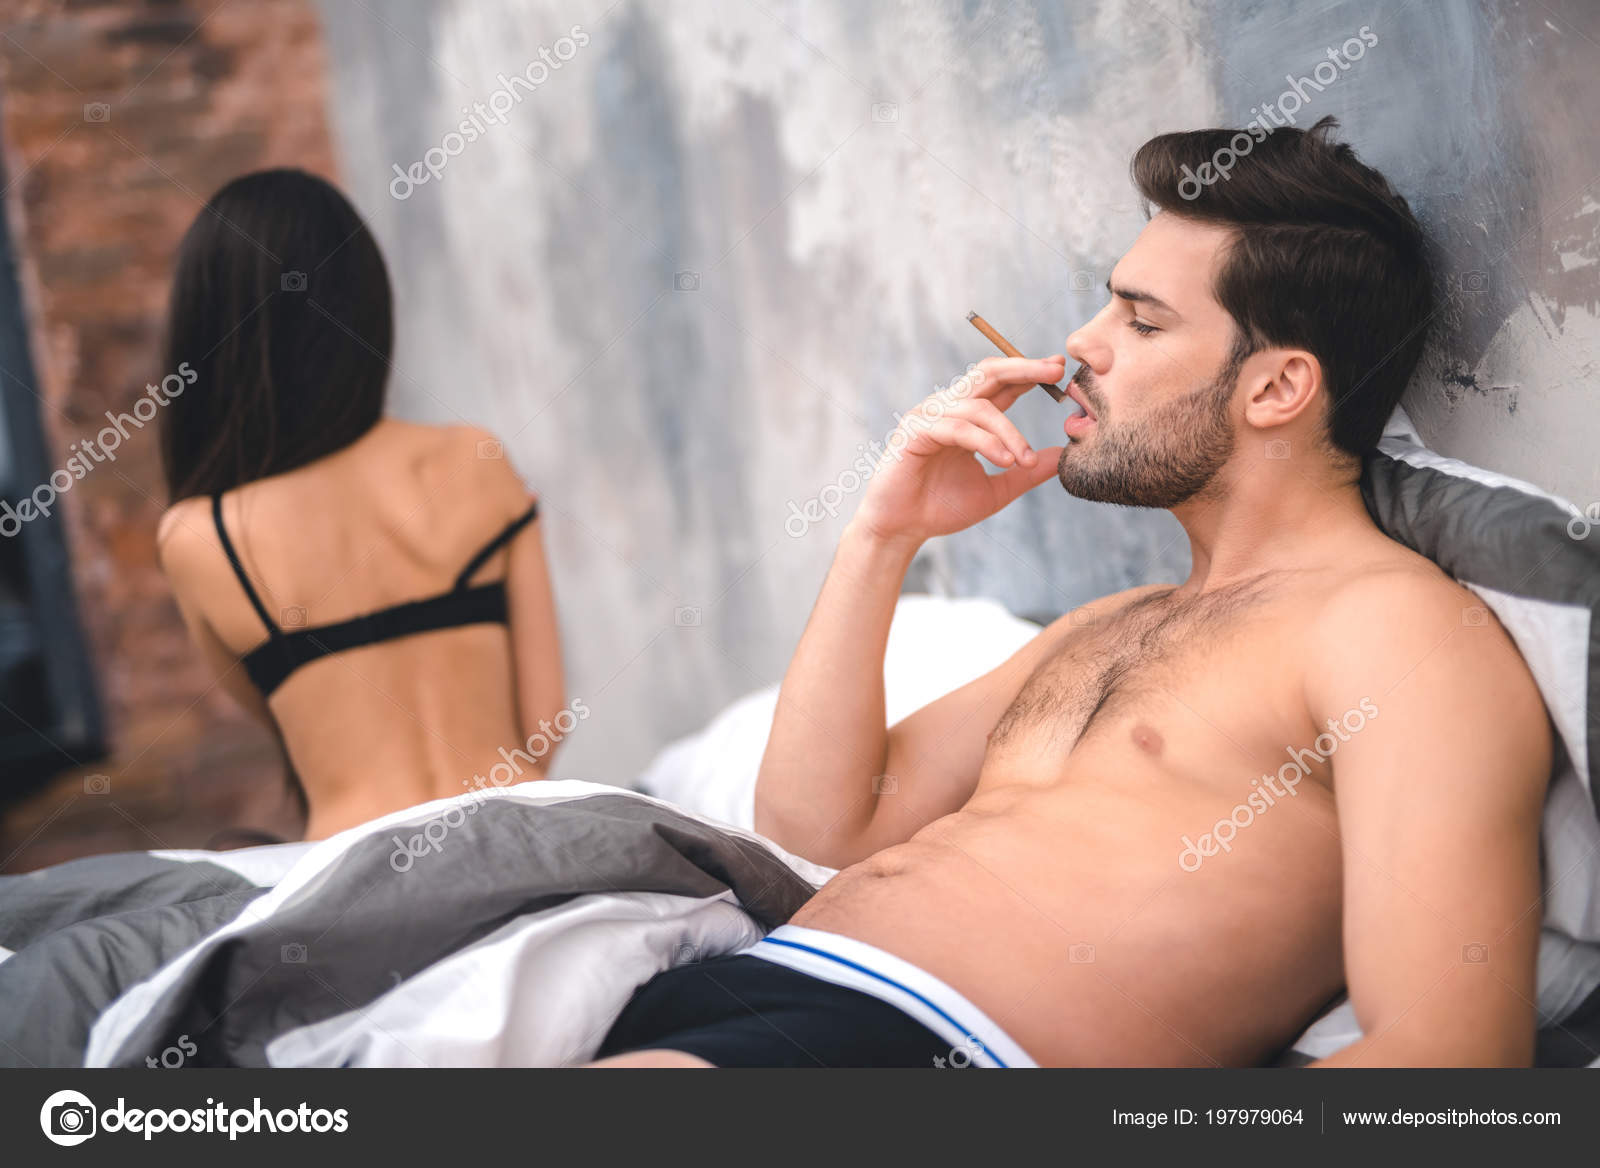 IMAGE(https://st4.depositphotos.com/16529236/19797/i/1600/depositphotos_197979064-stock-photo-presentable-man-smoking-after-sex.jpg)